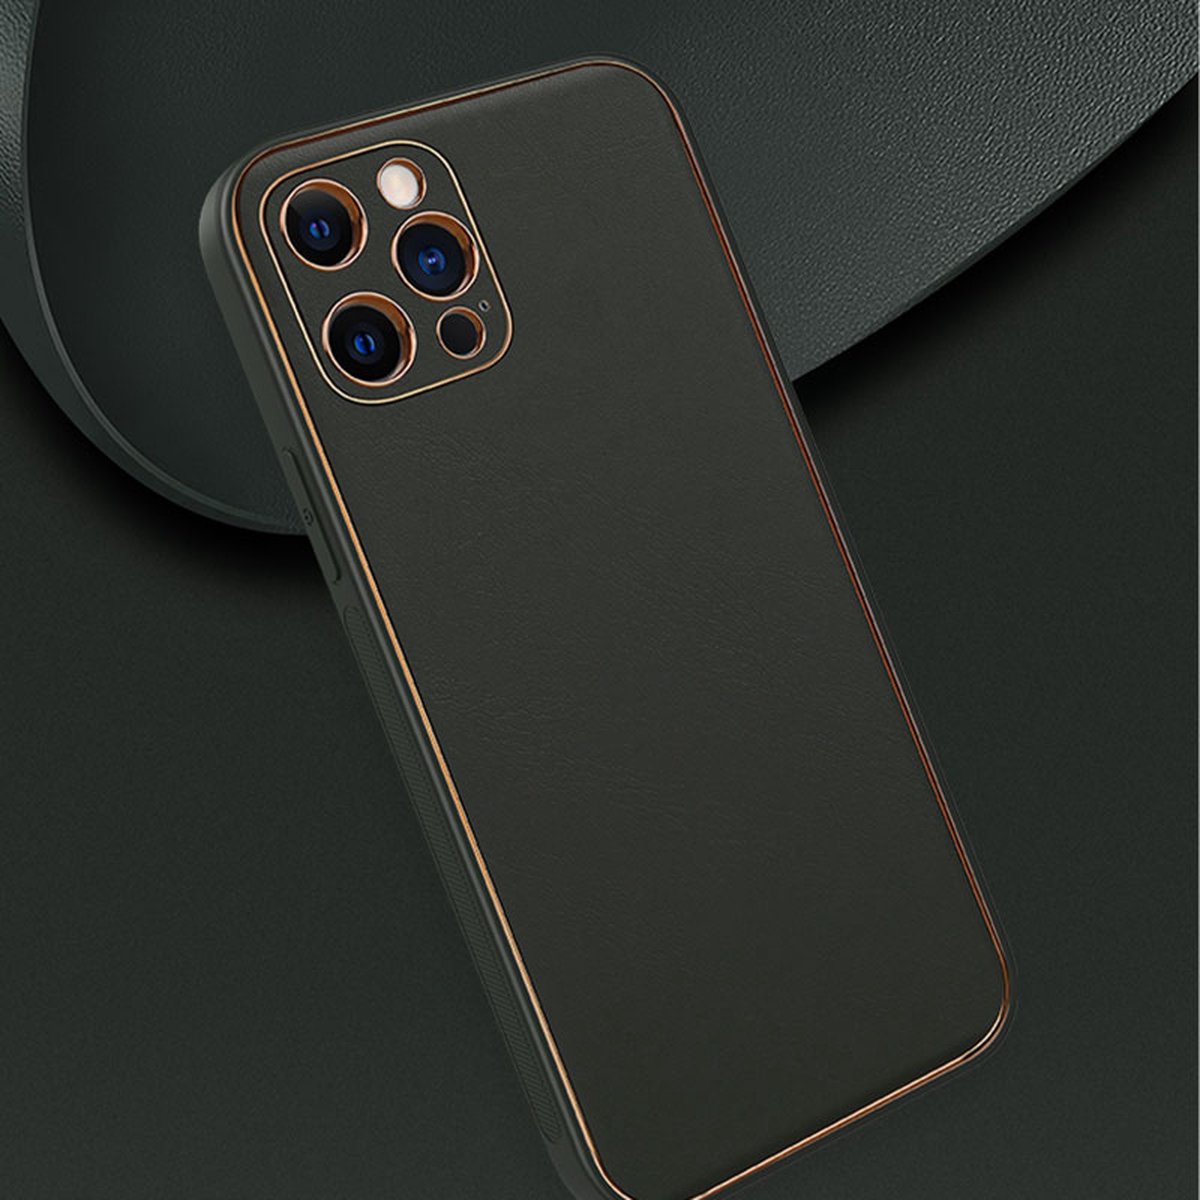 JPM Iphone 12 Black Leather Case